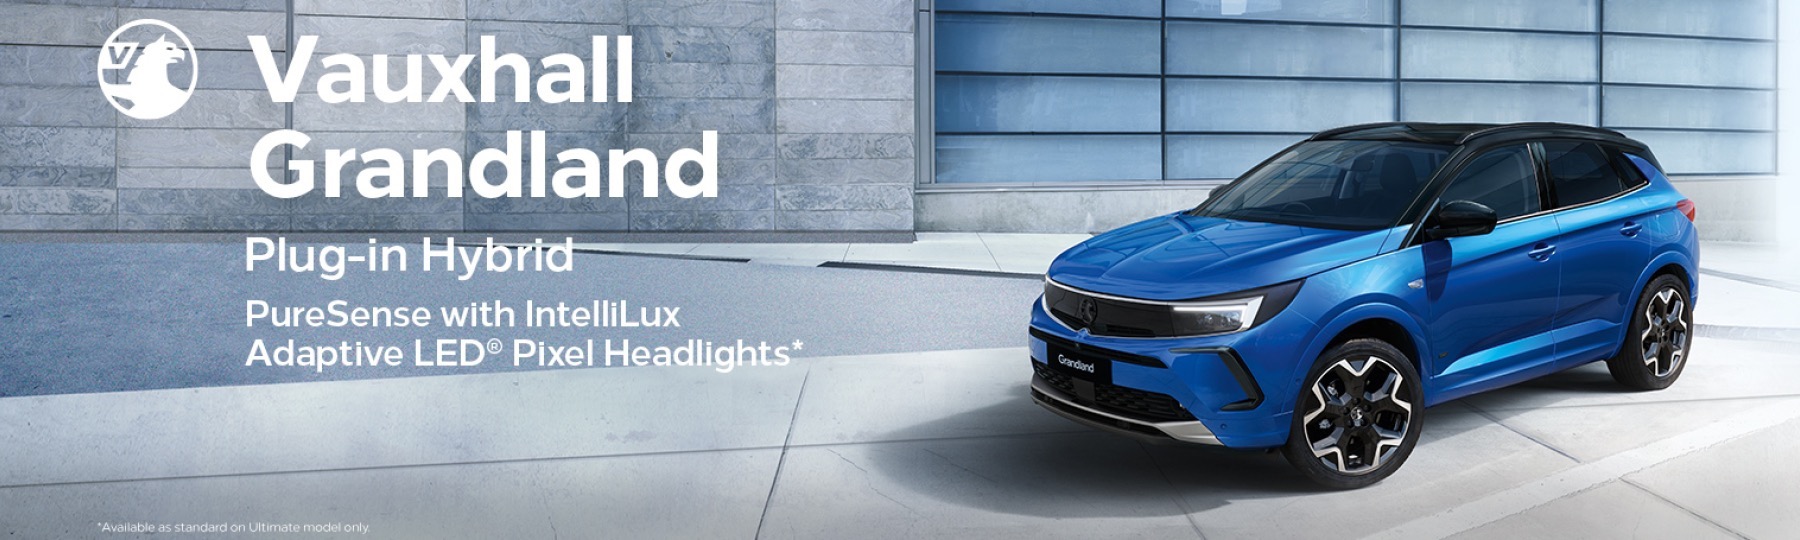 New Vauxhall Grandland Hybrid New Car Offer